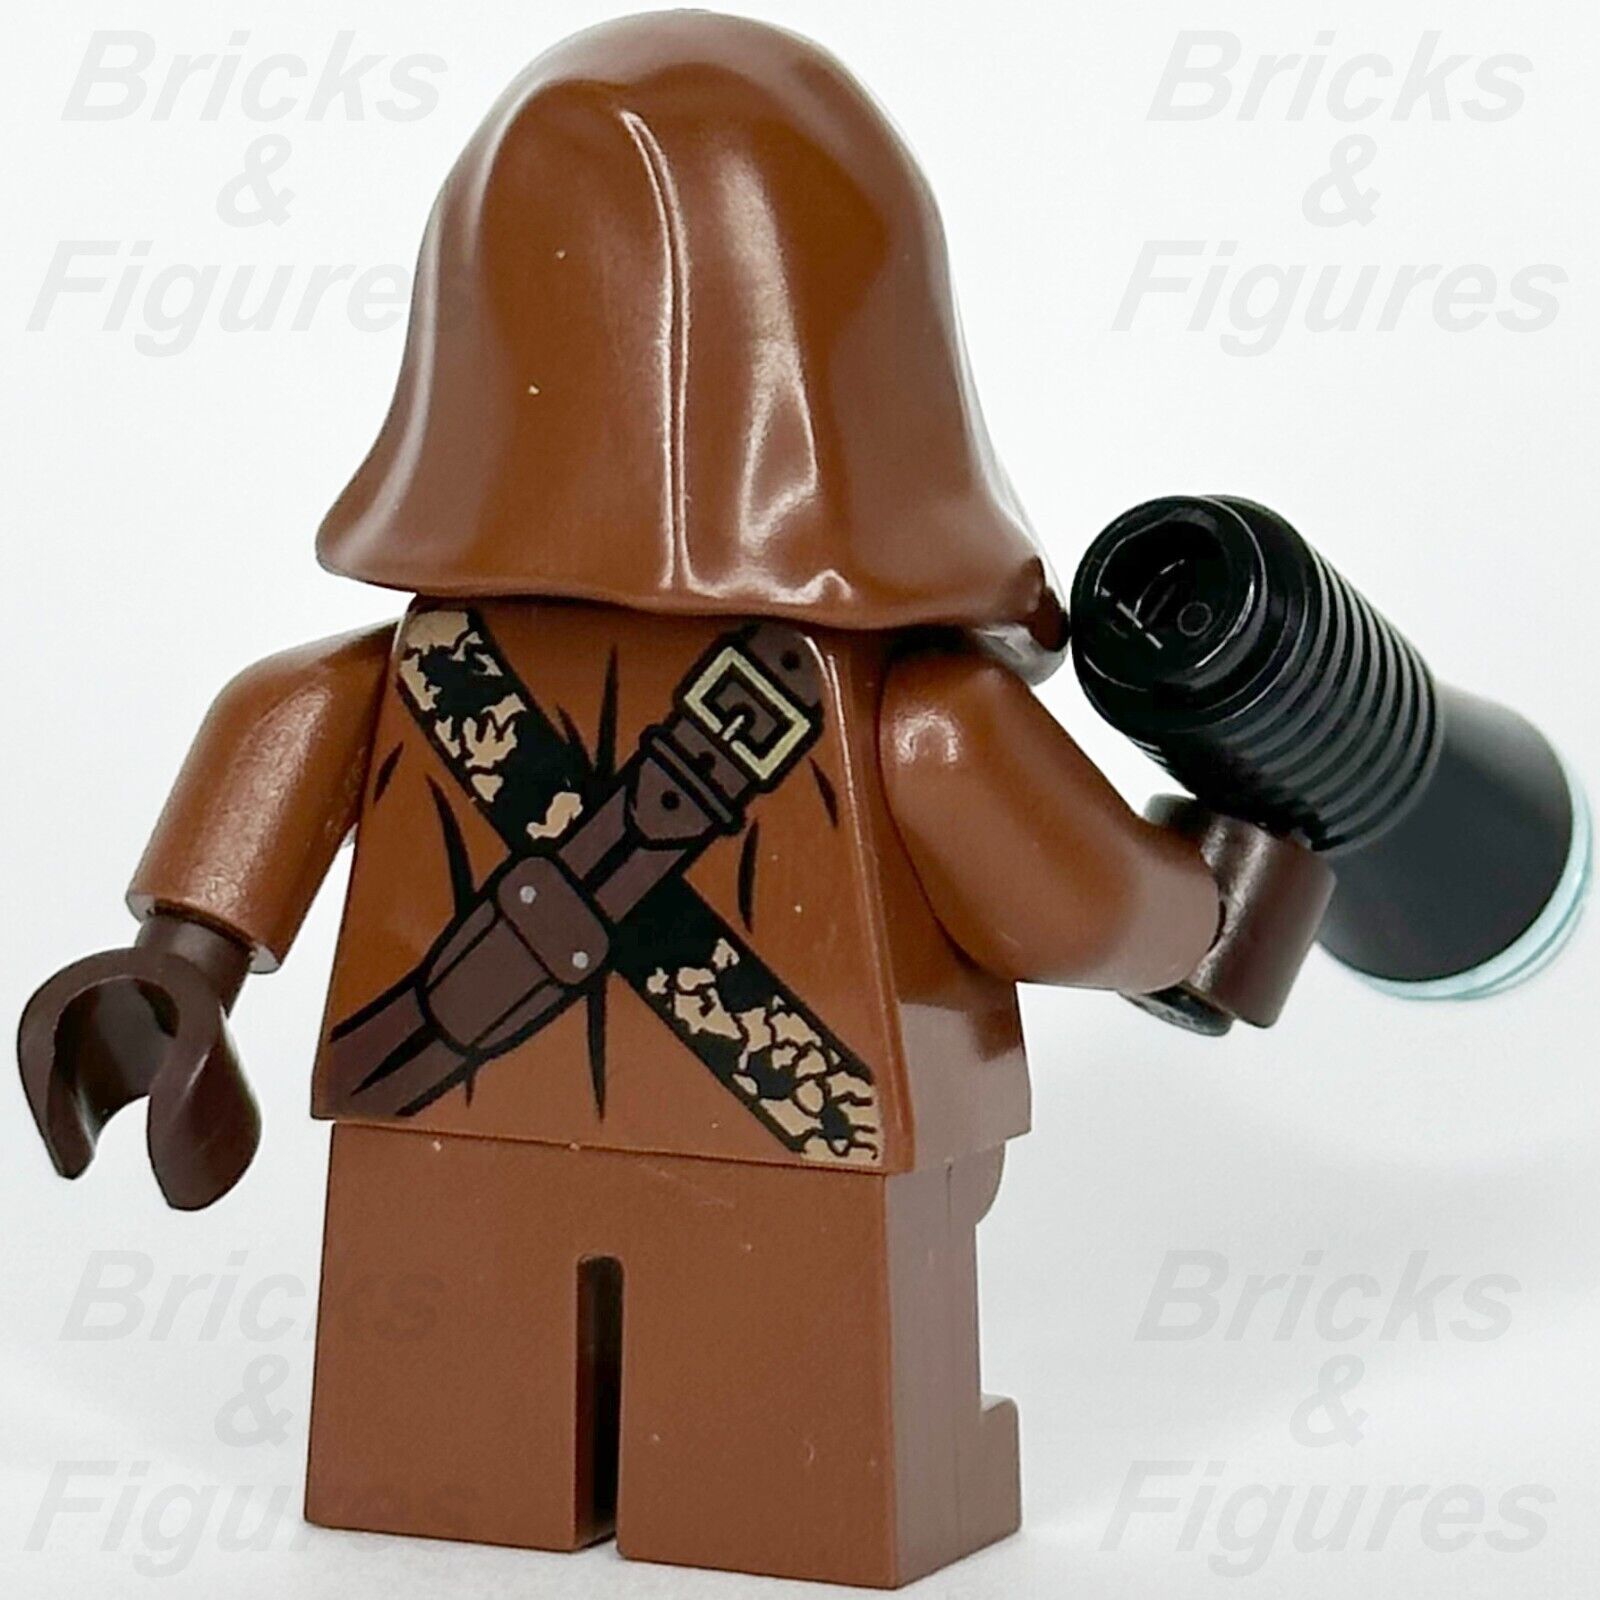 LEGO Star Wars Jawa Minifigure A New Hope Gold Badge 75136 75059 sw0590 Minifig